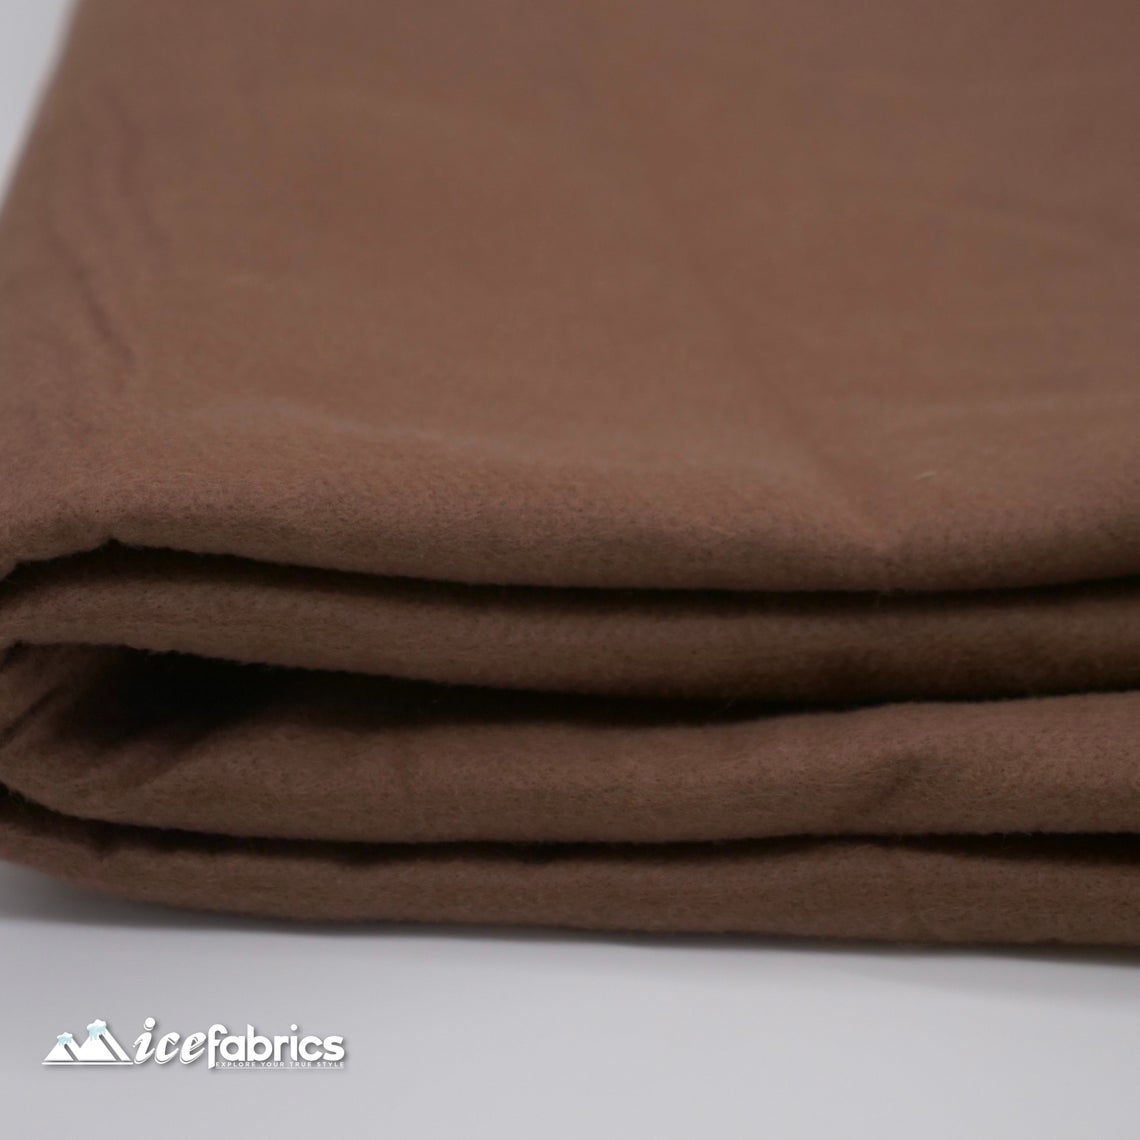 Acrylic Felt Fabric By The Roll | 20 yards | Wholesale Fabric ICE FABRICS Brown